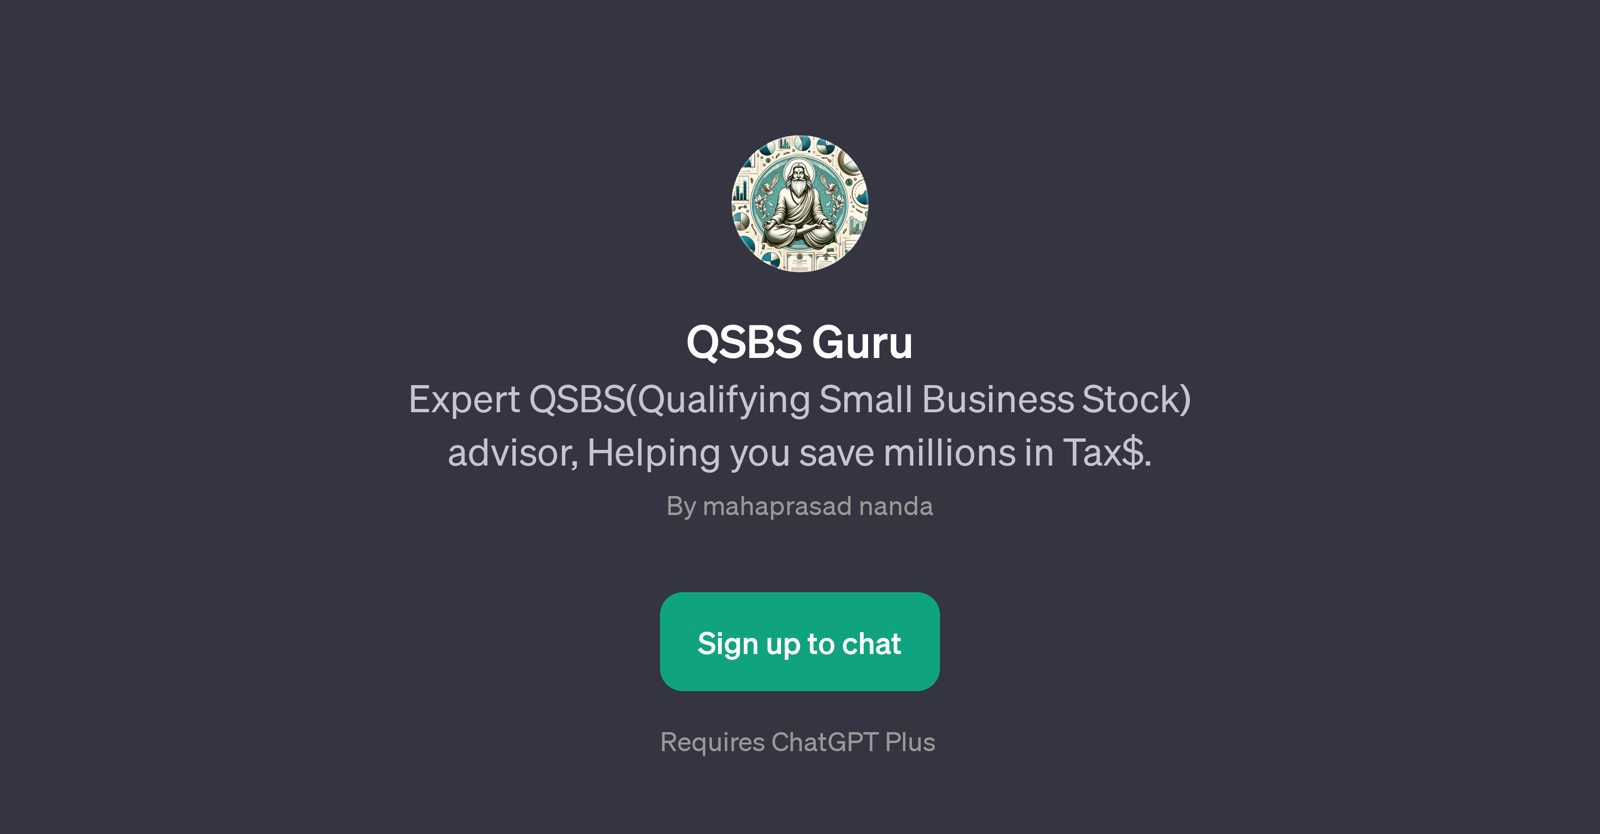 QSBS Guru website